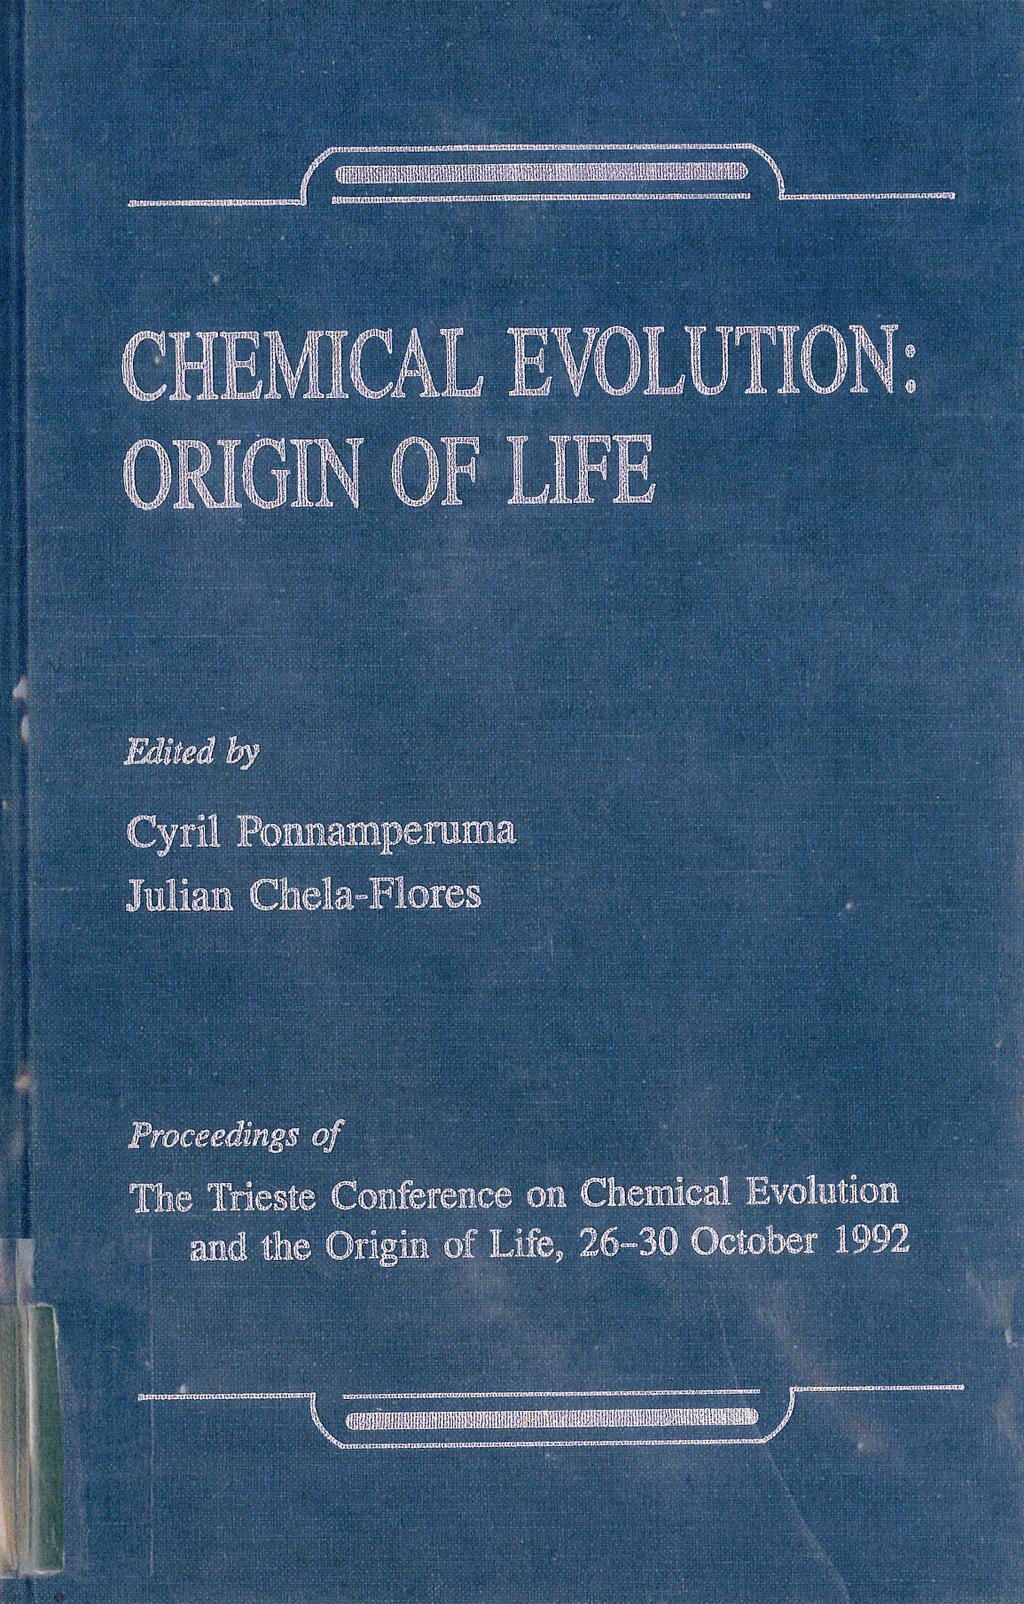 2 1. Ponnamperuma, C. and Chela-Flores, J., eds. (1993). Chemical Evolution: Origin of Life, A. Deepak Publishing, Hampton, Virginia, USA. A. Deepak Publishing, http://www.